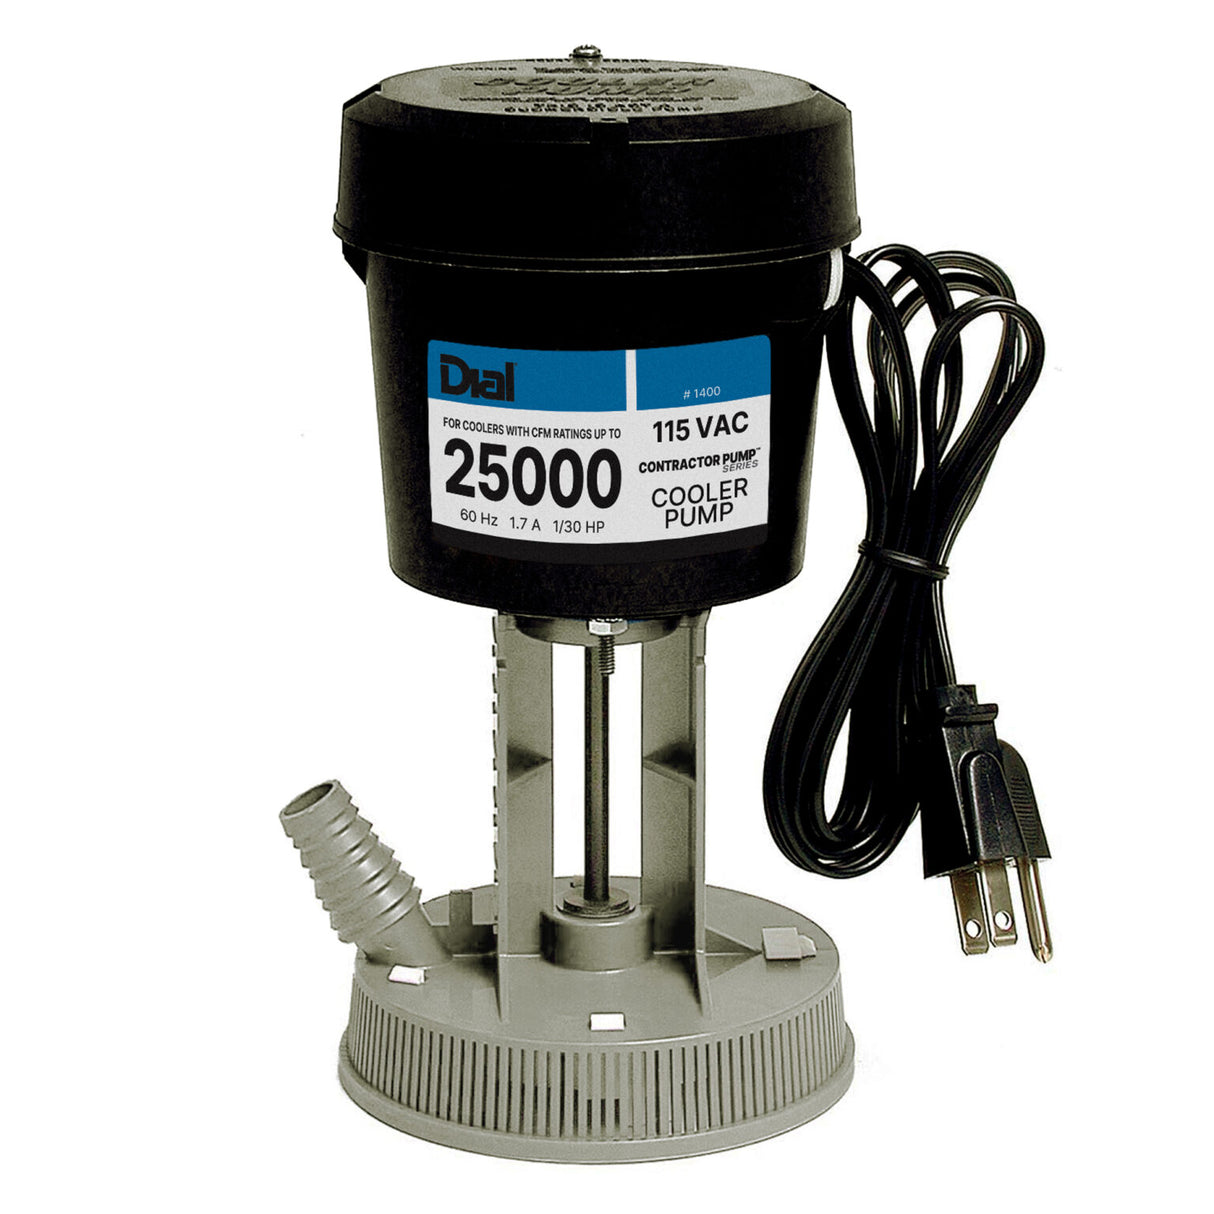 Dial 25,000 CFM 115V Evaporative Cooler Pump with Cord